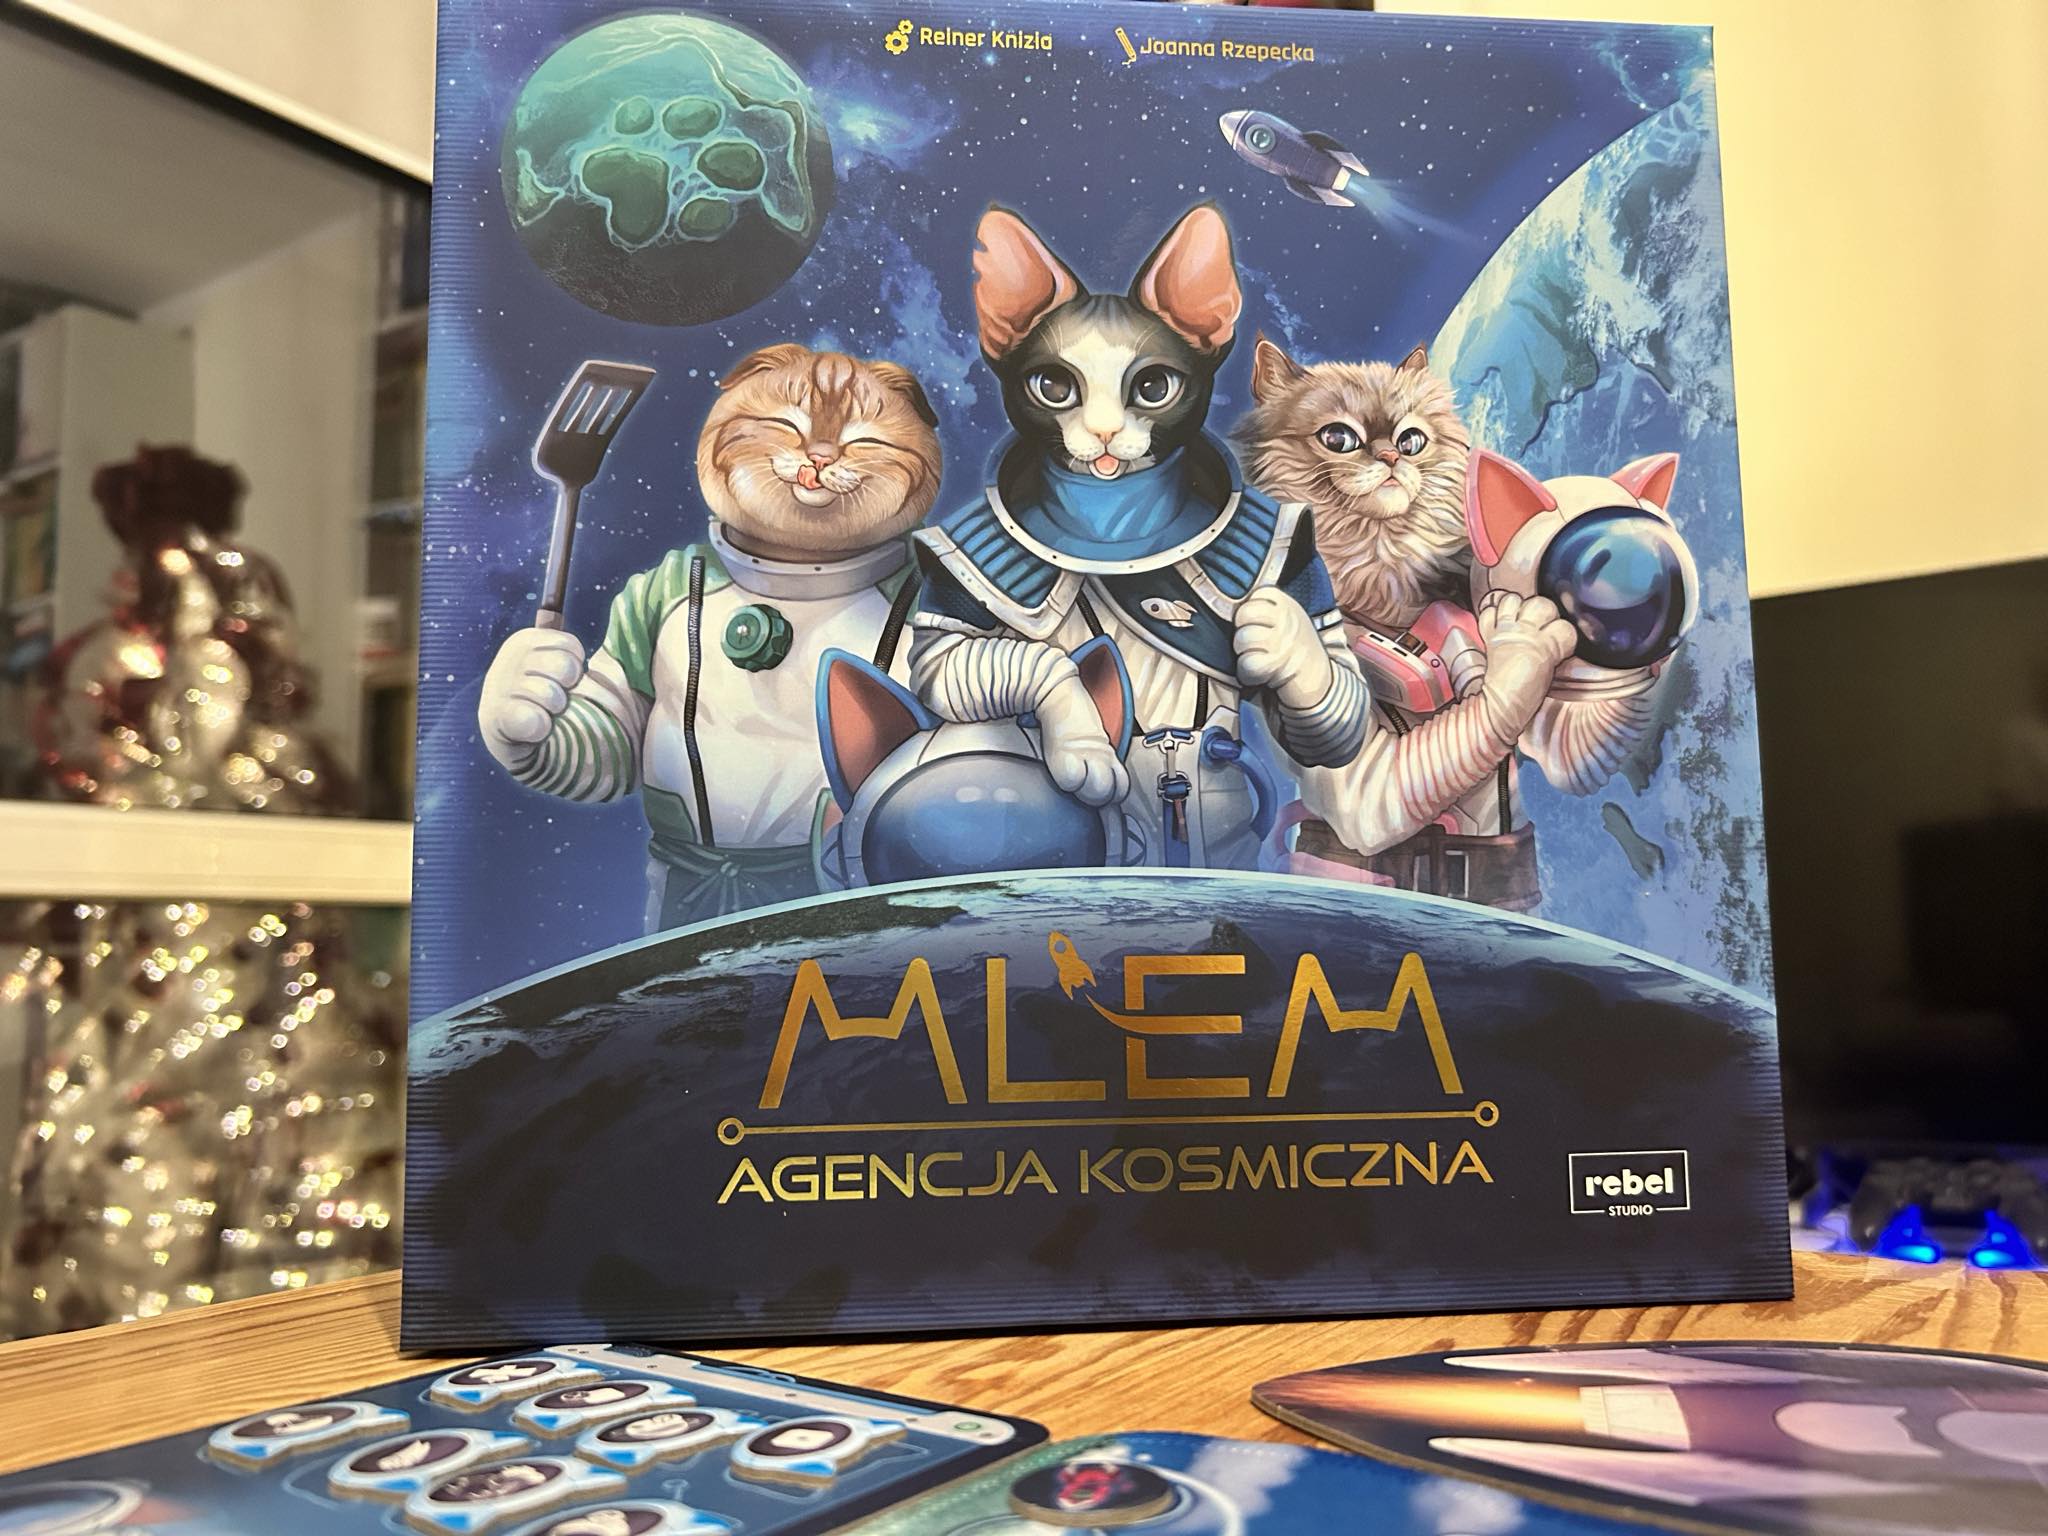 MLEM - Agencja Kosmiczna